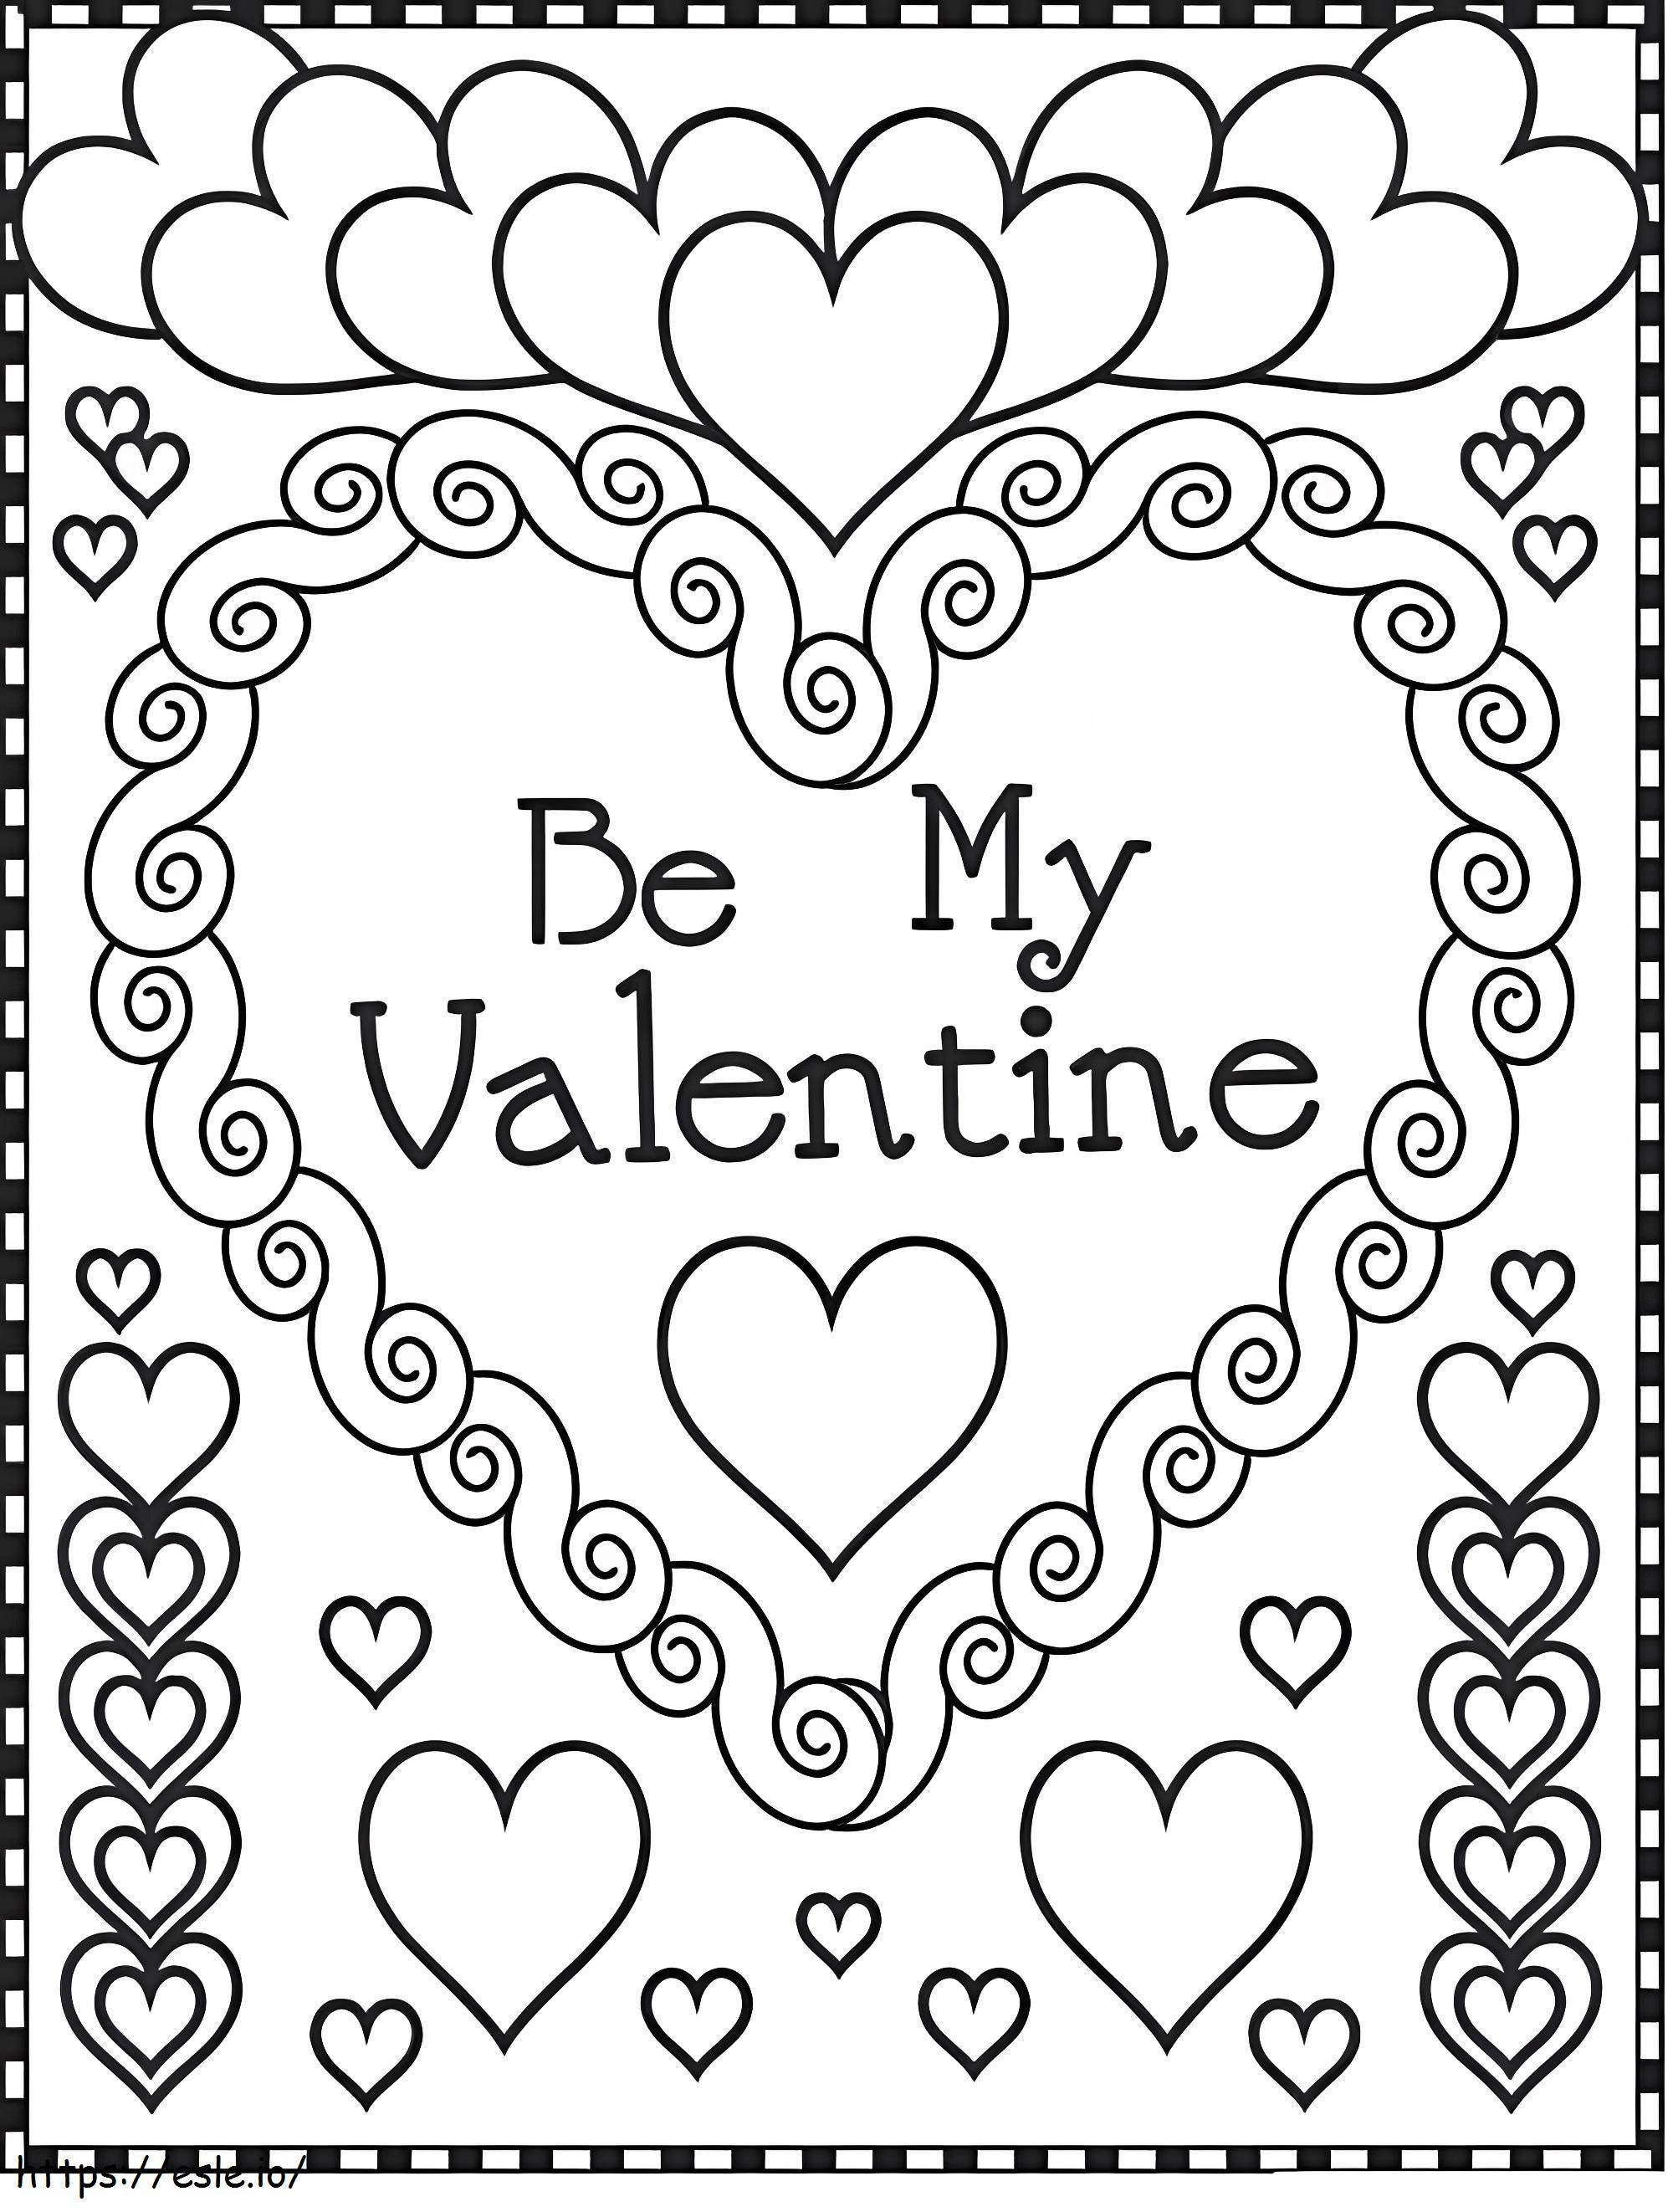 Fii al meu card Valentine Heart de colorat